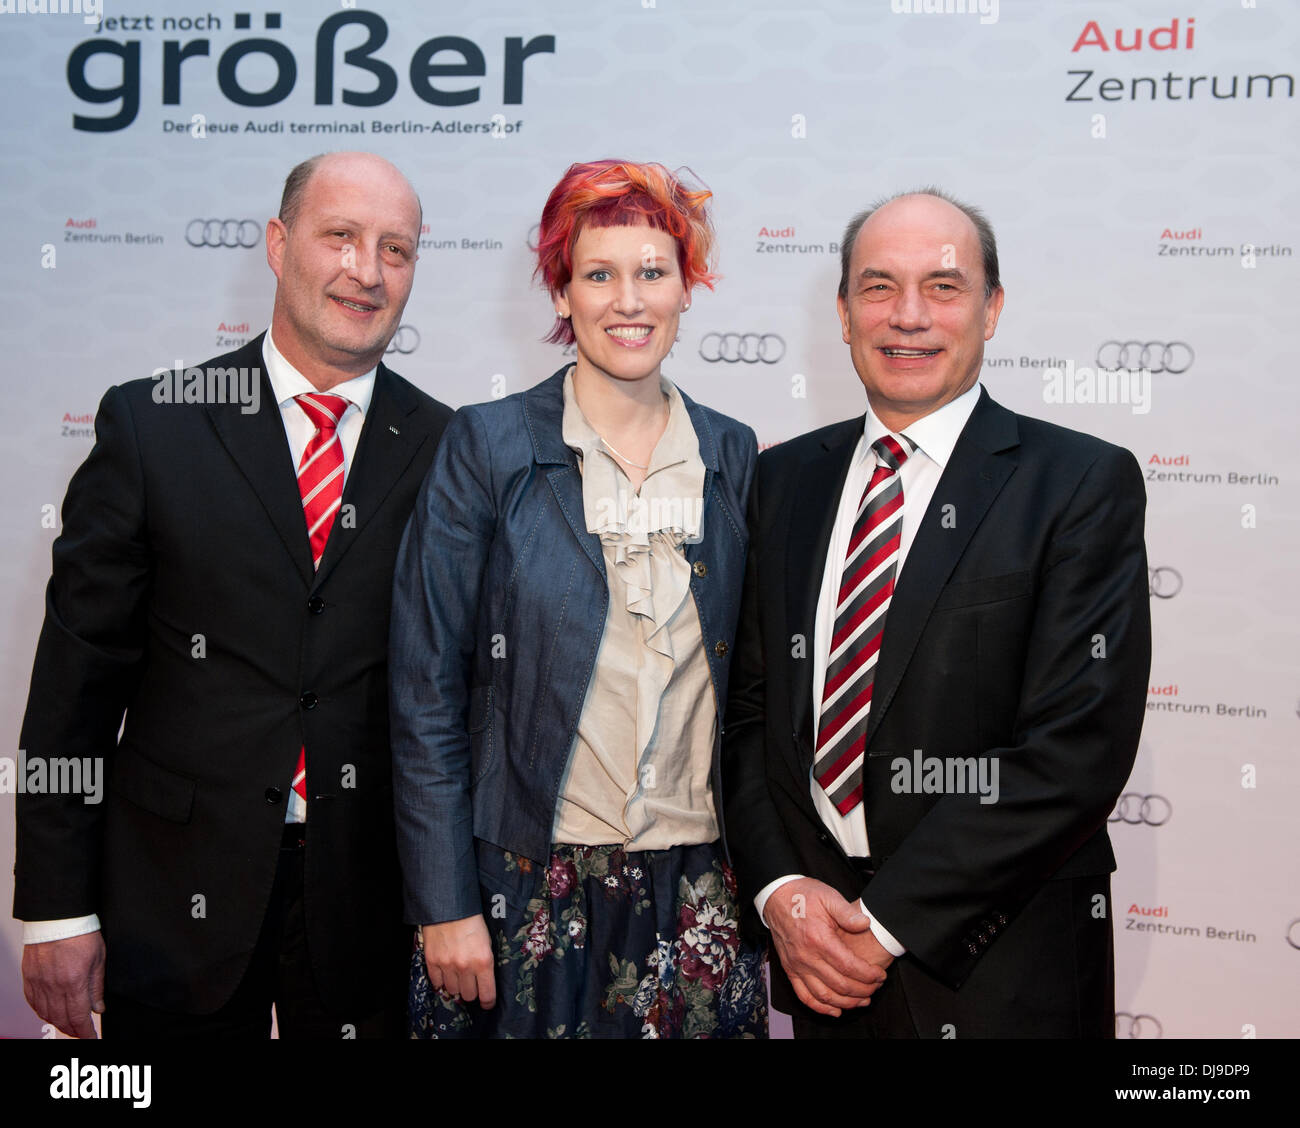 Andre Reiser, SKati Wilhelm and Ferdinand Schneider at Grand Opening of the Audi Zentrum Berlin-Adlershof. Berlin, Germany - 18.04.2012 Stock Photo